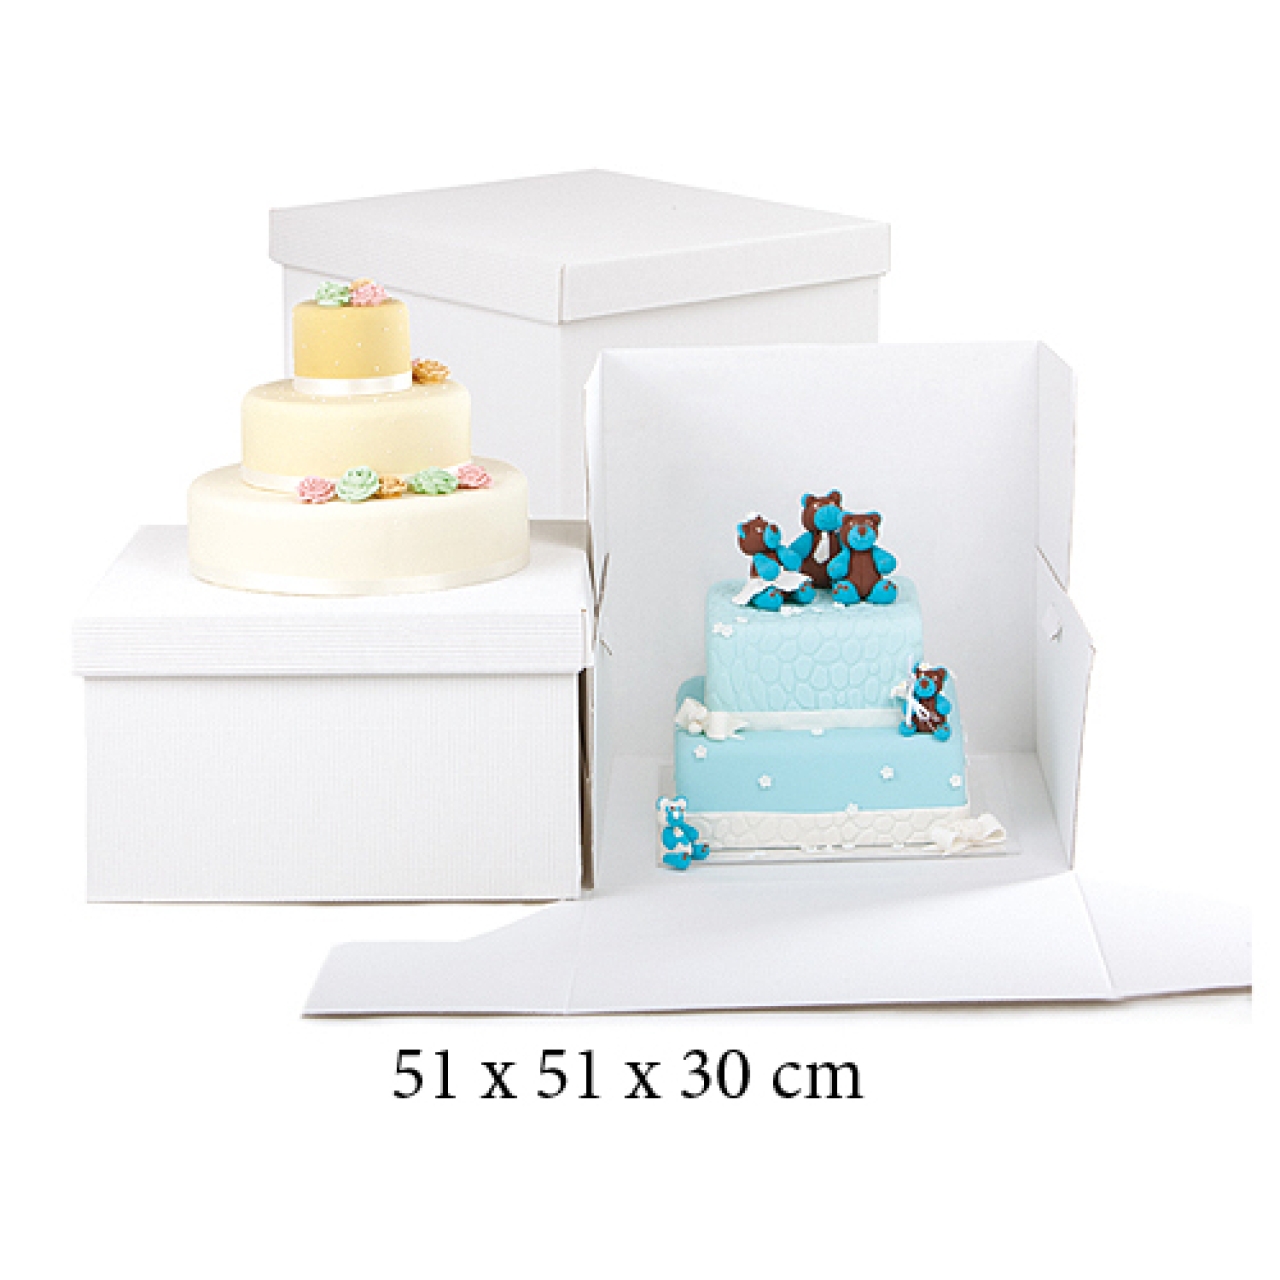 Tortenbox würfel, extra tief, XXL-Karton für Torte, 51 x 30 cm, 1 Stck.